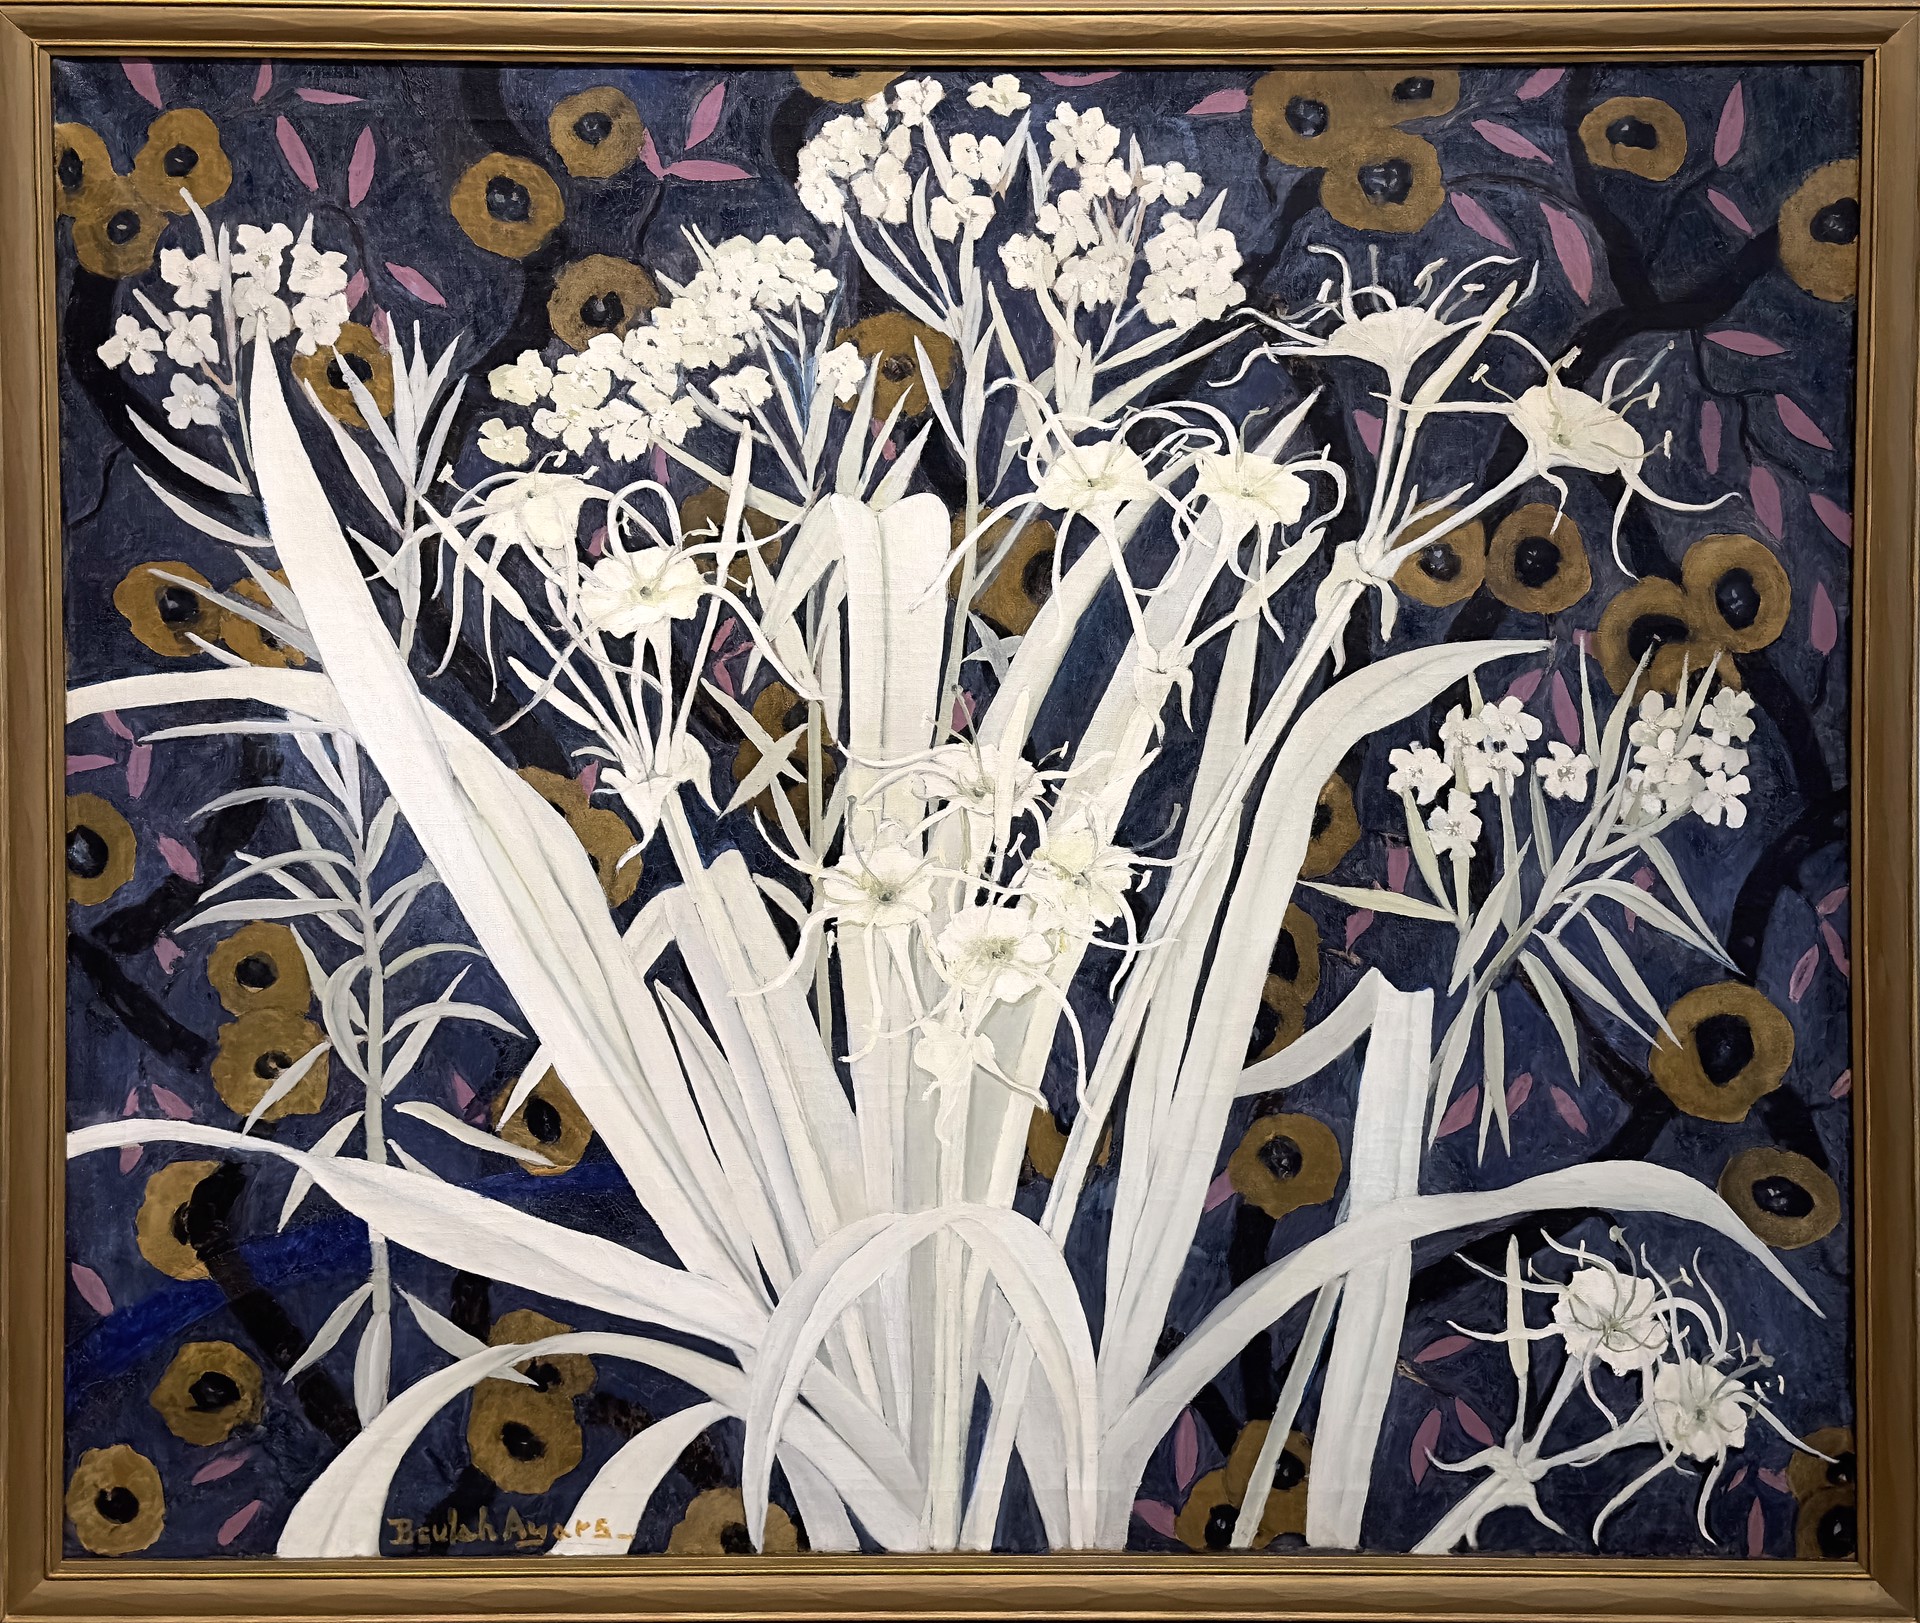 Modern Decoration (White Spider Lilies) by Beulah Schiller Ayars